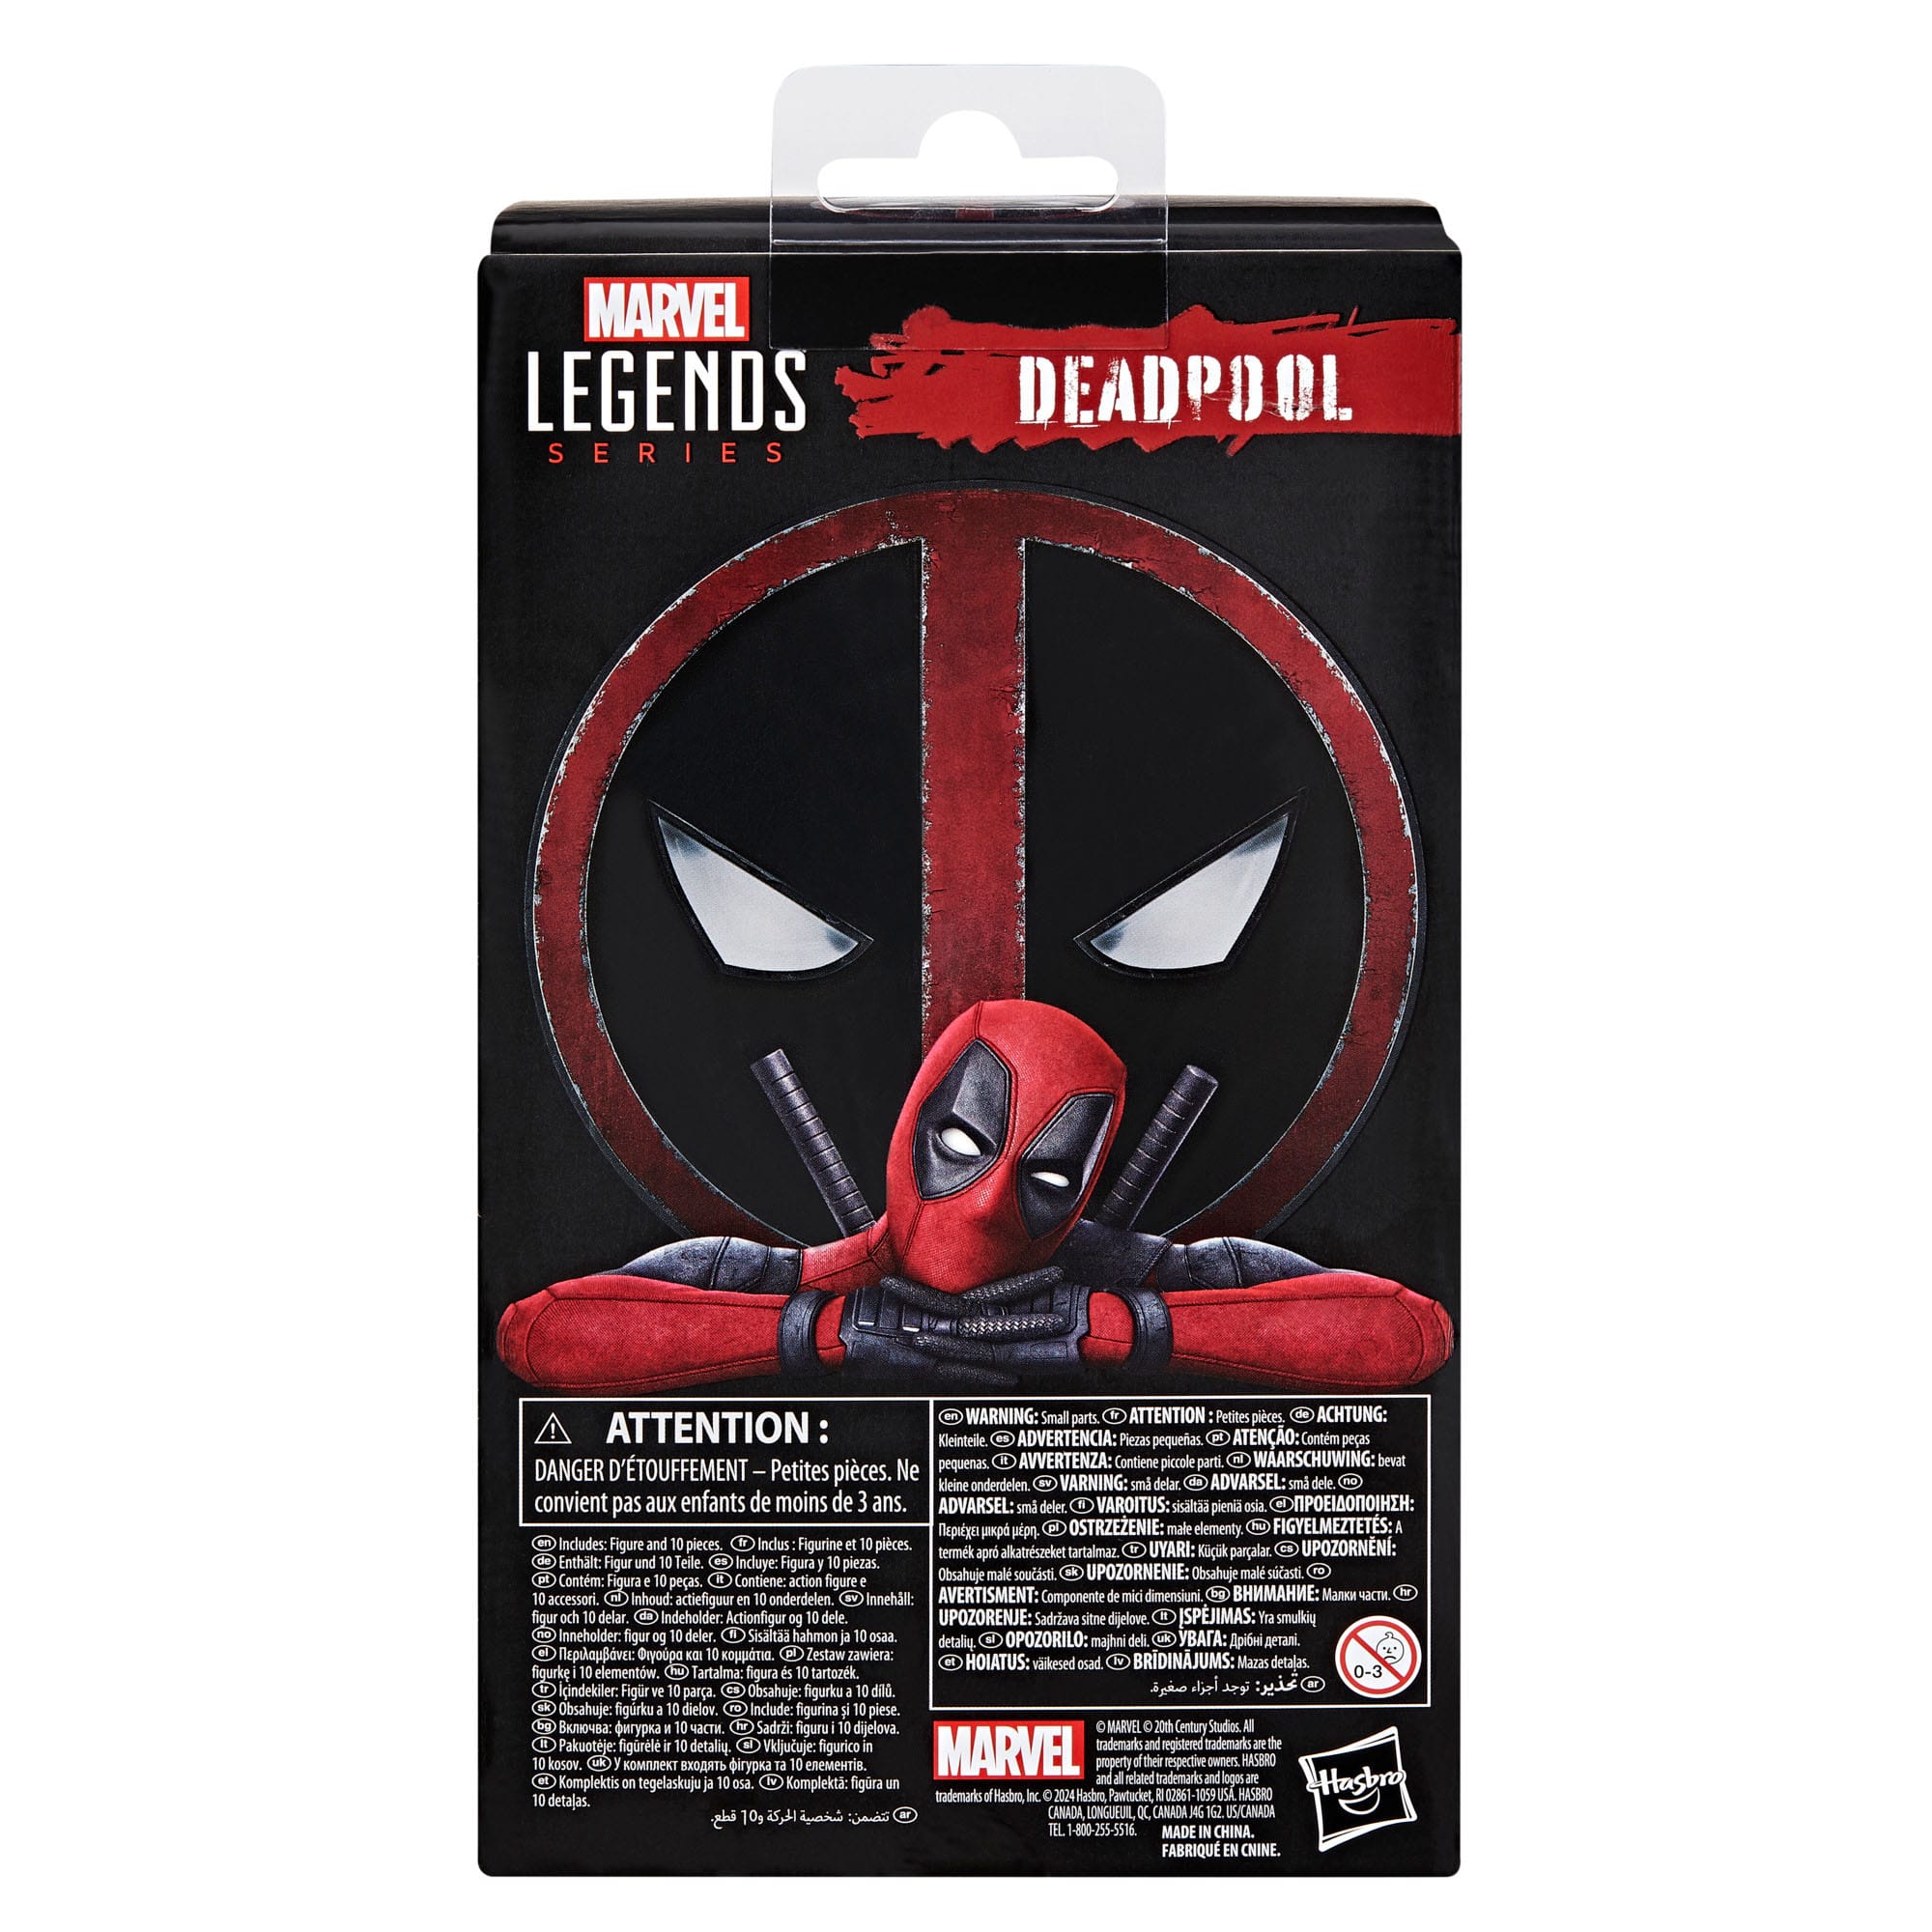 Deadpool Legacy Collection Marvel Legends Actionfigur Deadpool 15 cm HASG0970 5010996267252